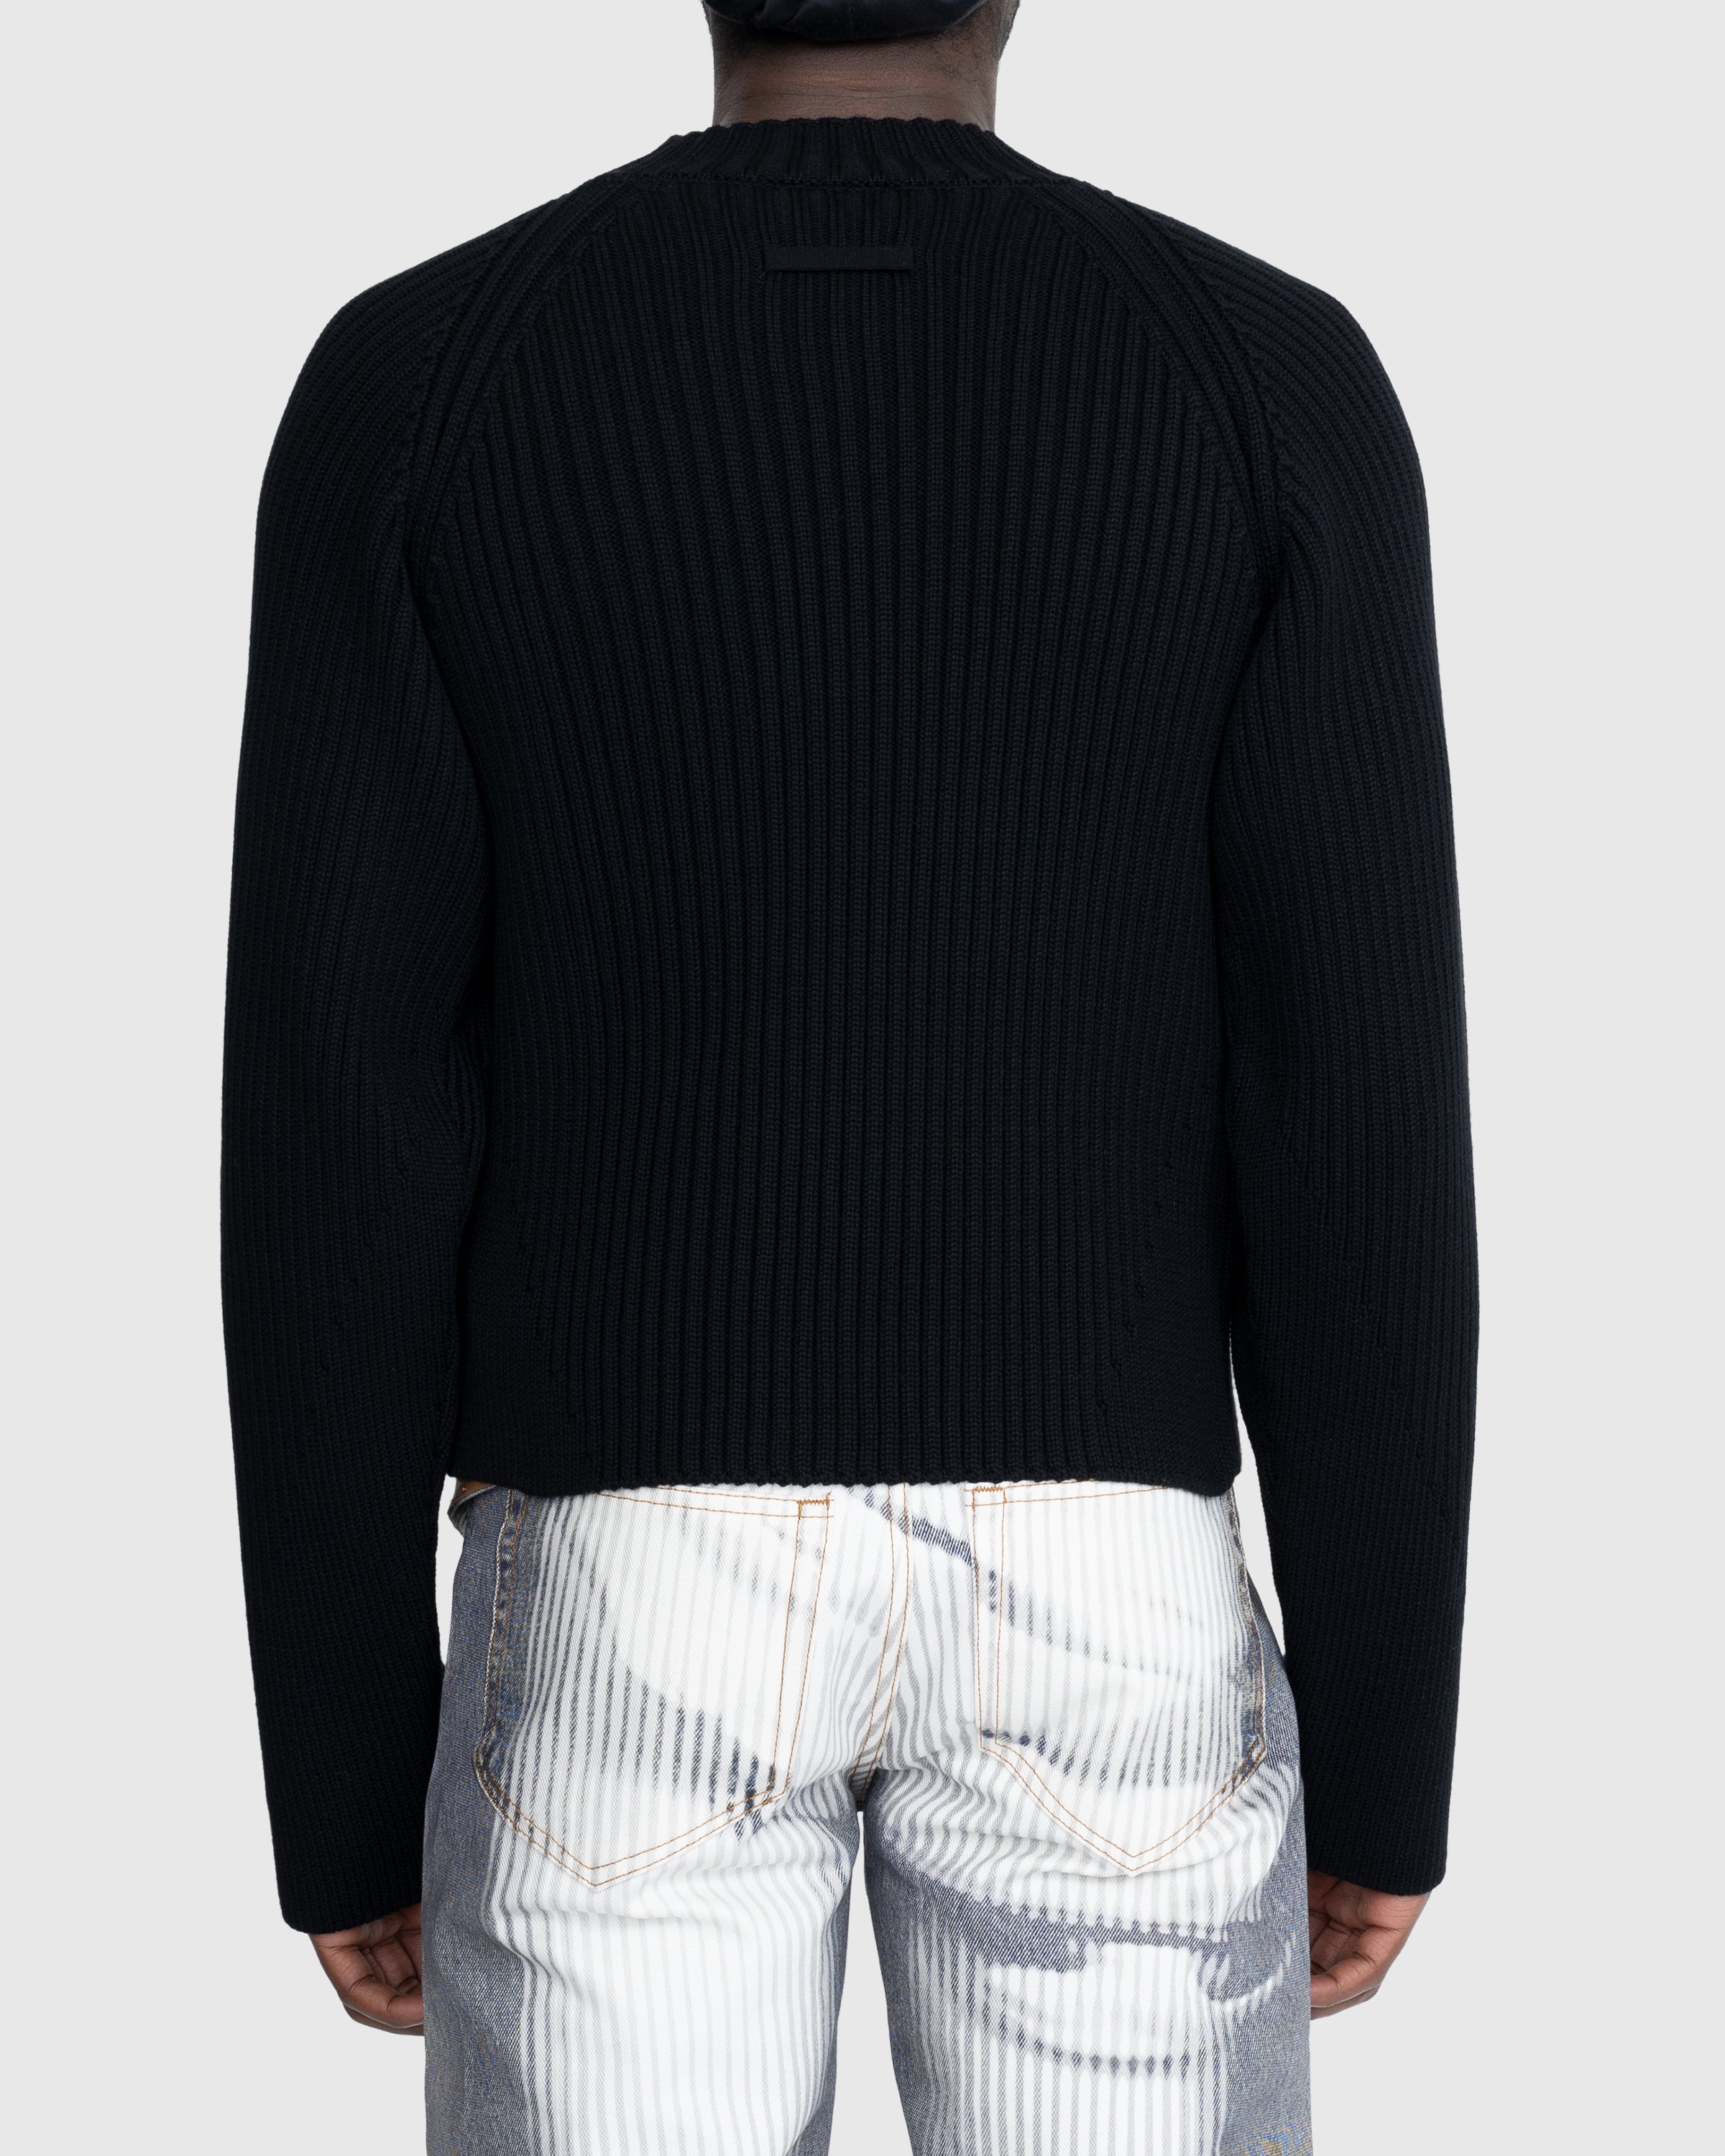 Jean Paul Gaultier - Oversized Sweater - Clothing - Black - Image 3